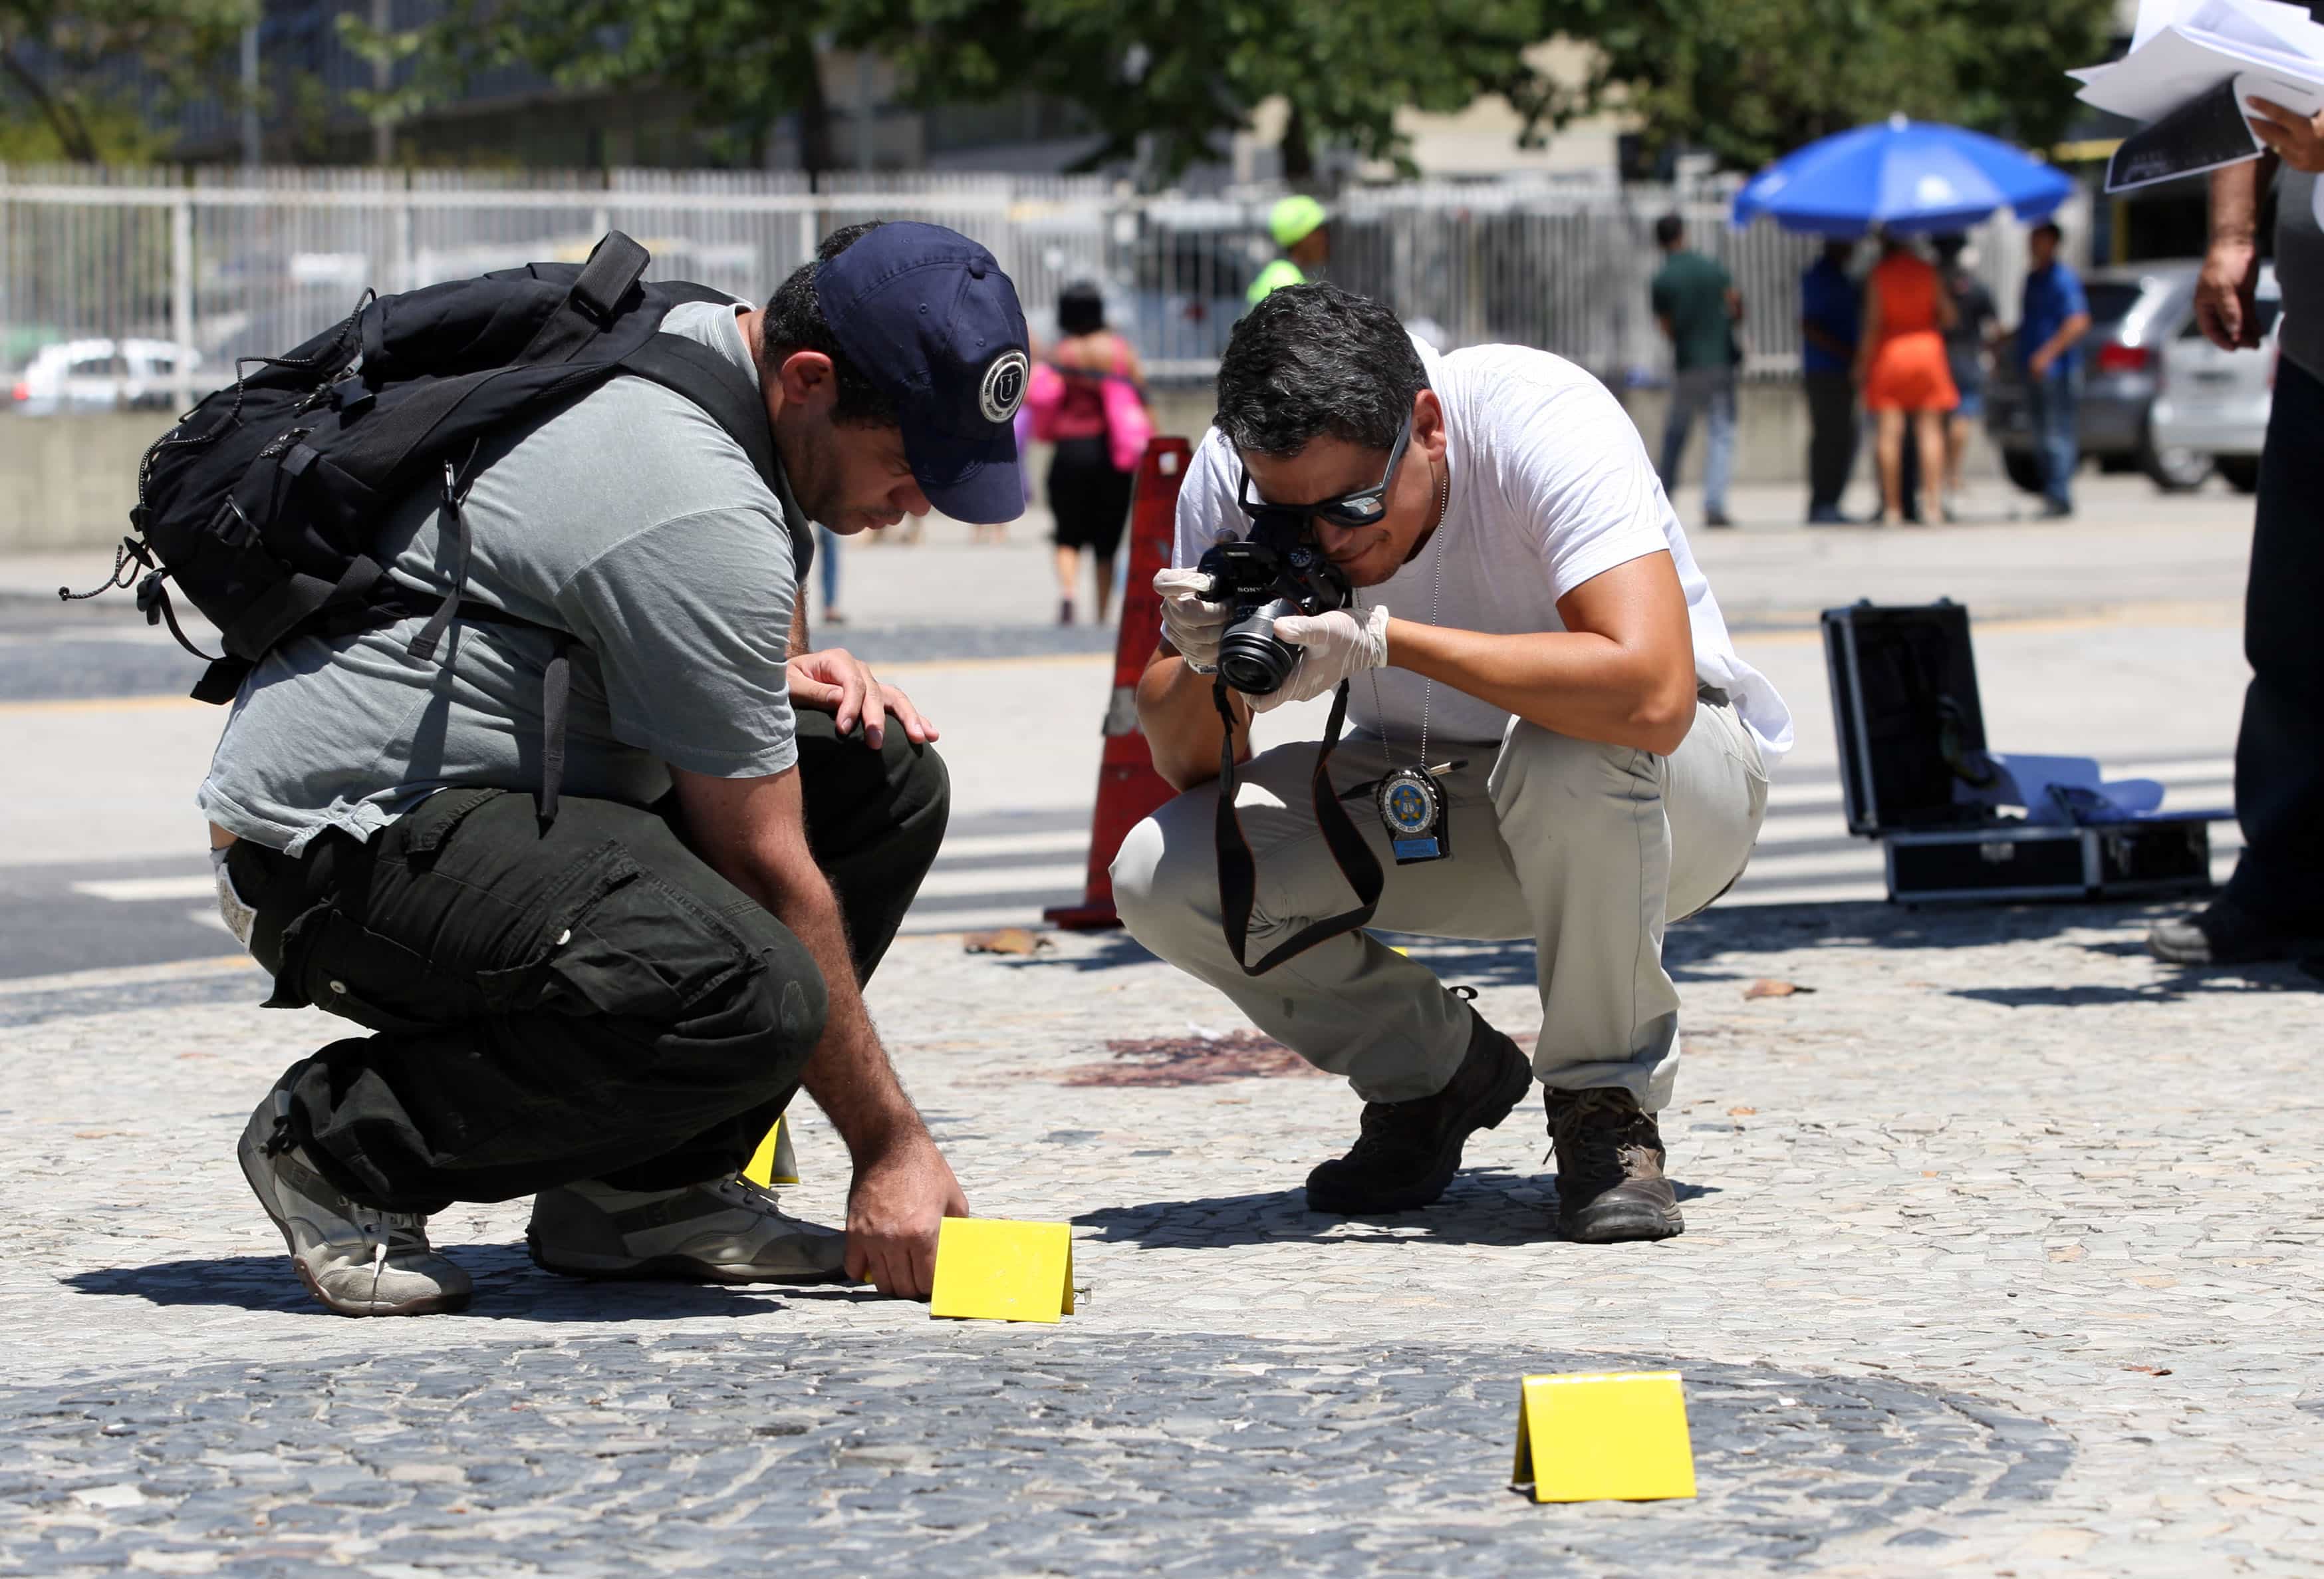 Police investigate in Sao Cristovao, north of Rio de Janeiro, where cameraman Santiago Andrade was hit in the head by fireworks on 6 February 2014, MARCOS ARCOVERDE/ESTADAO CONTEUDO (Agencia Estado via AP Images)